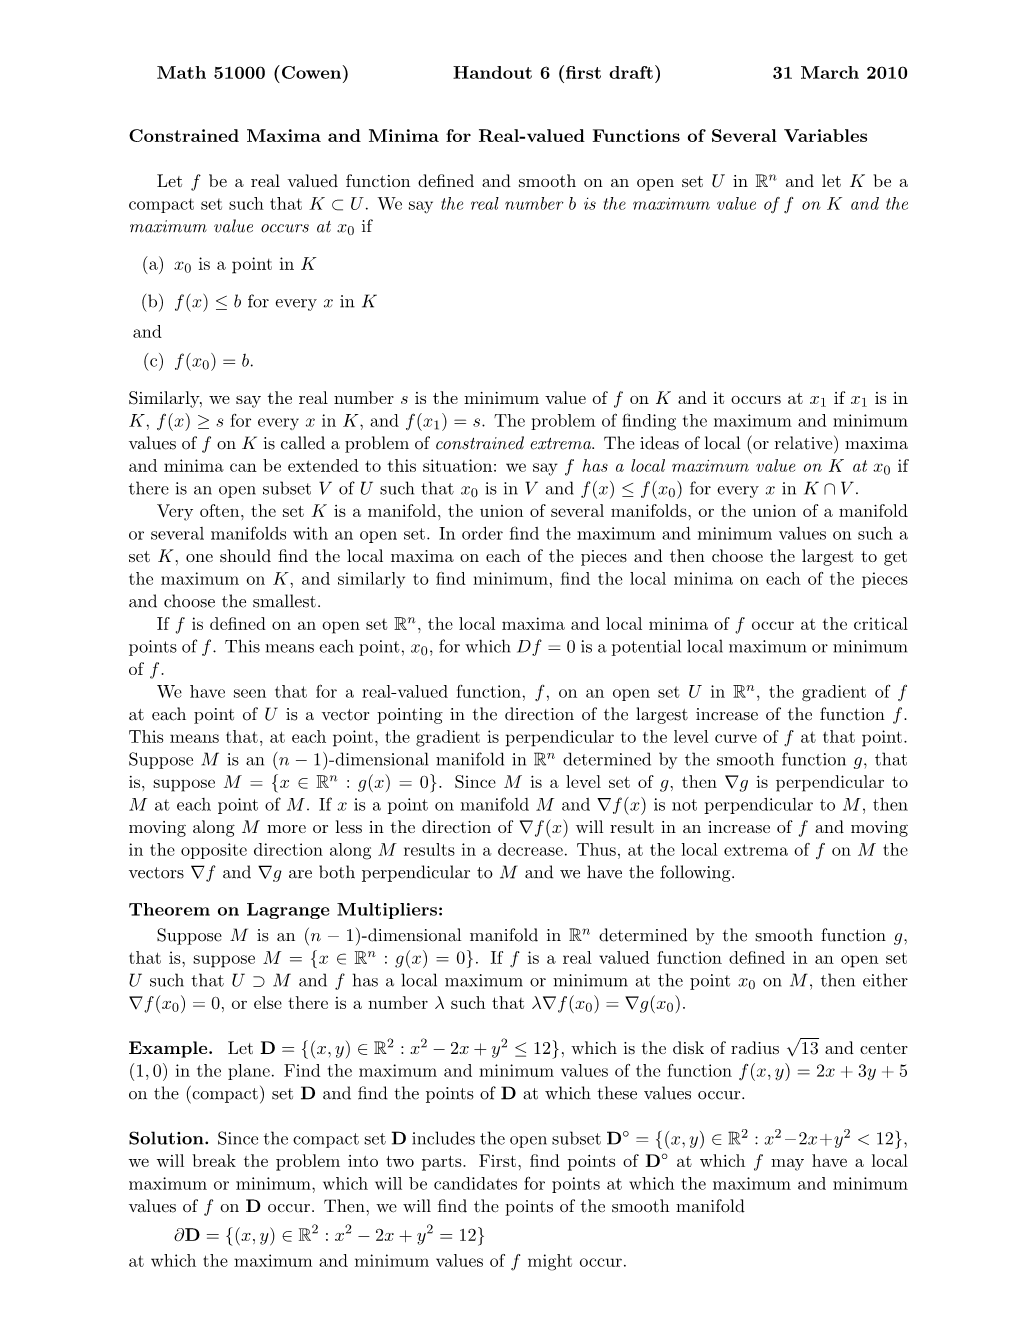 Math 51000 (Cowen) Handout 6 (First Draft) 31 March 2010 Constrained